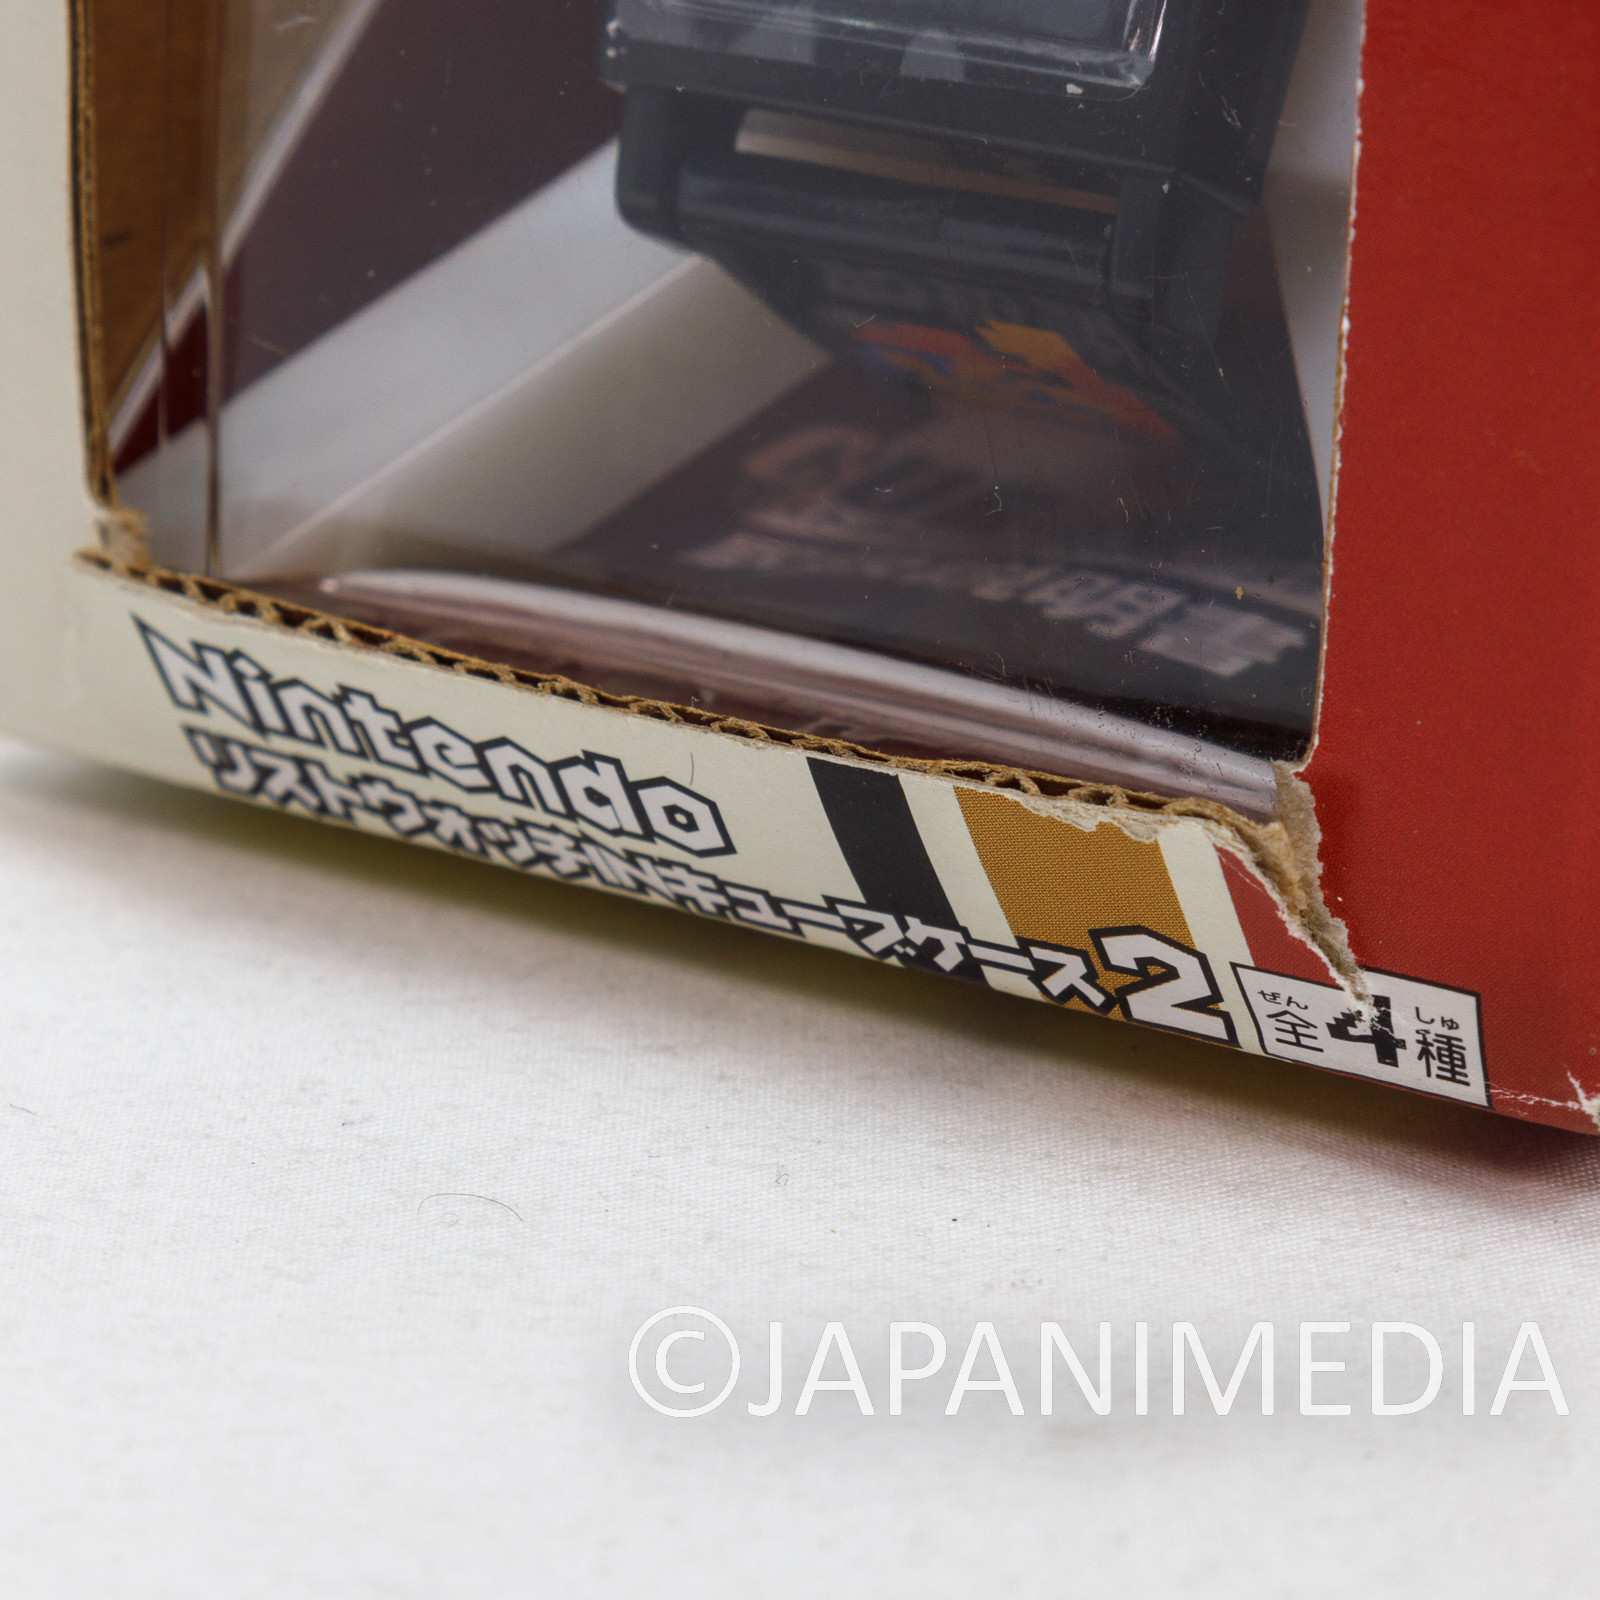 RARE Nintendo Wrist Watch In Cube Case Mario Brothers Banpresto JAPAN GAME NES